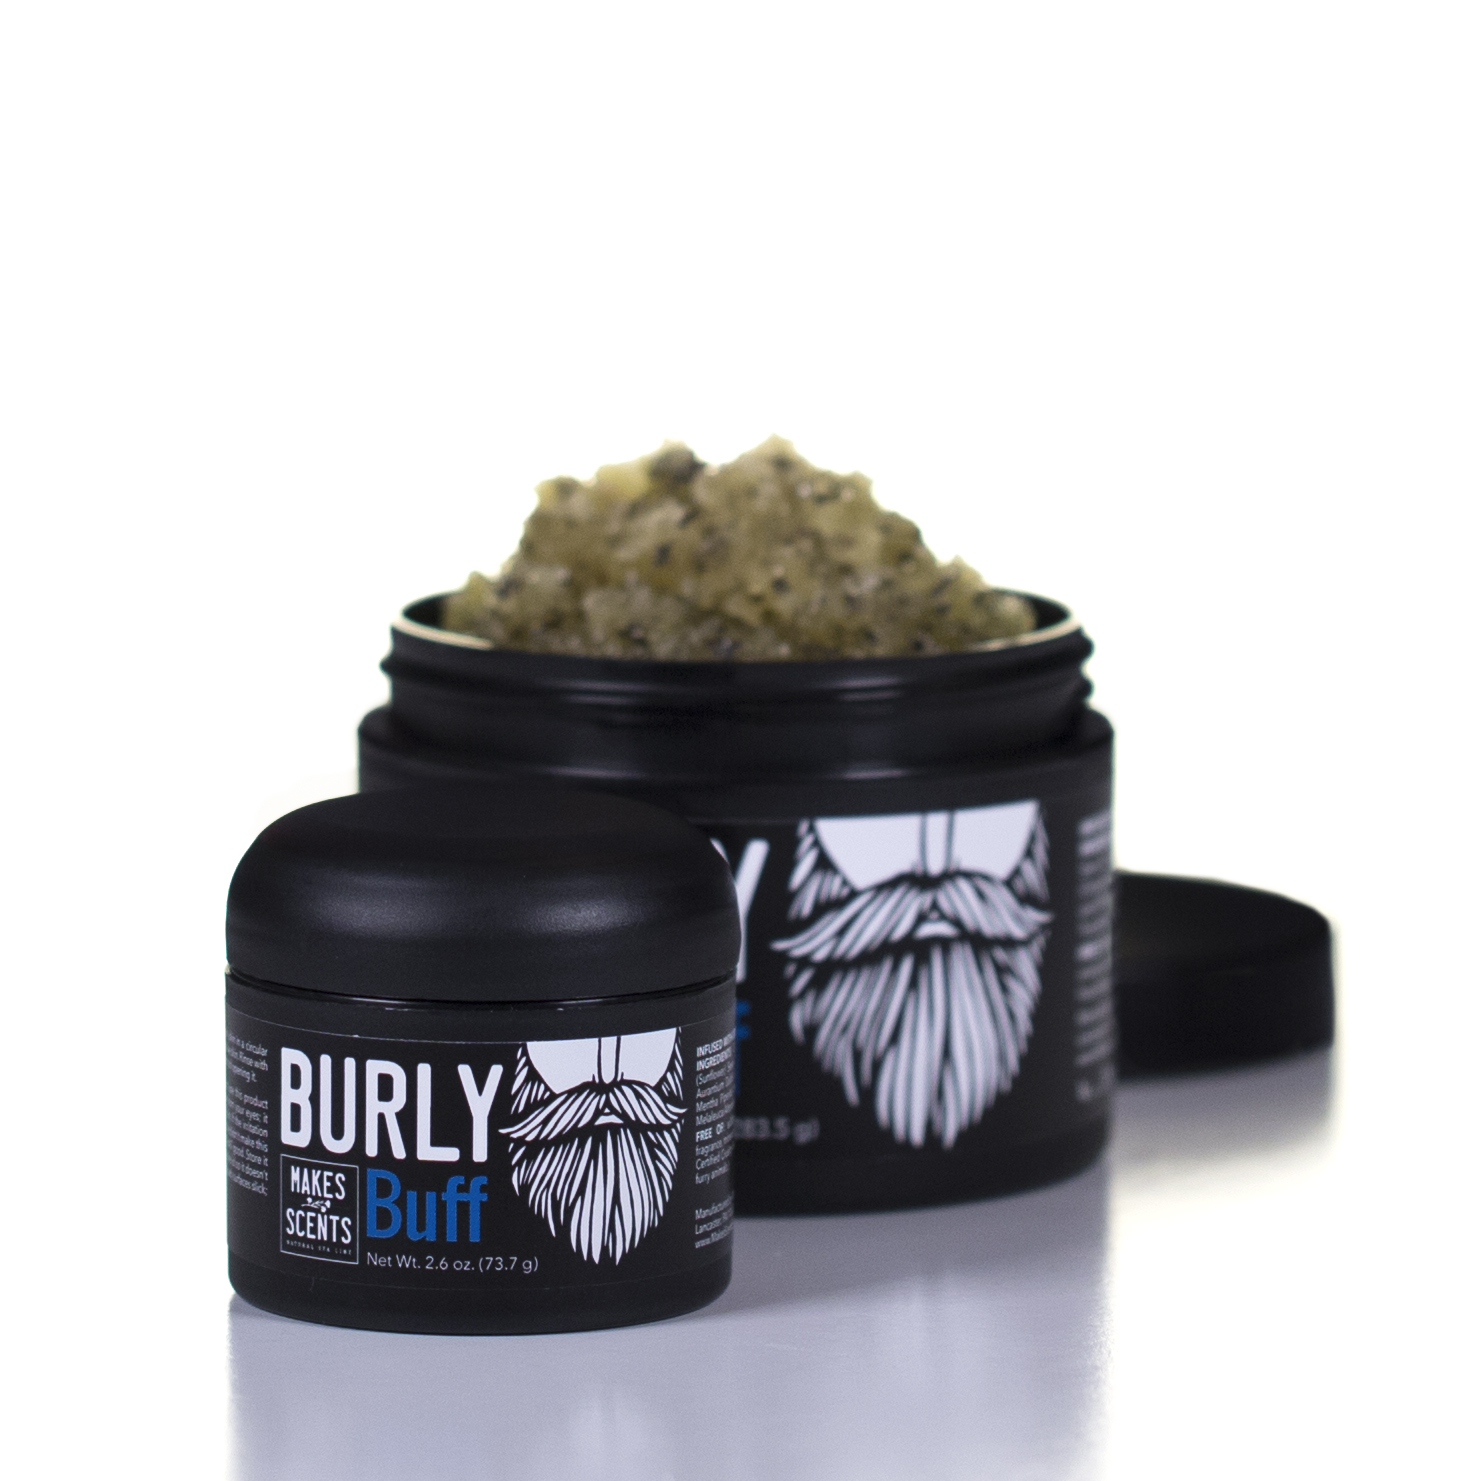 Burly Buff | Wholesale Spa Supplies